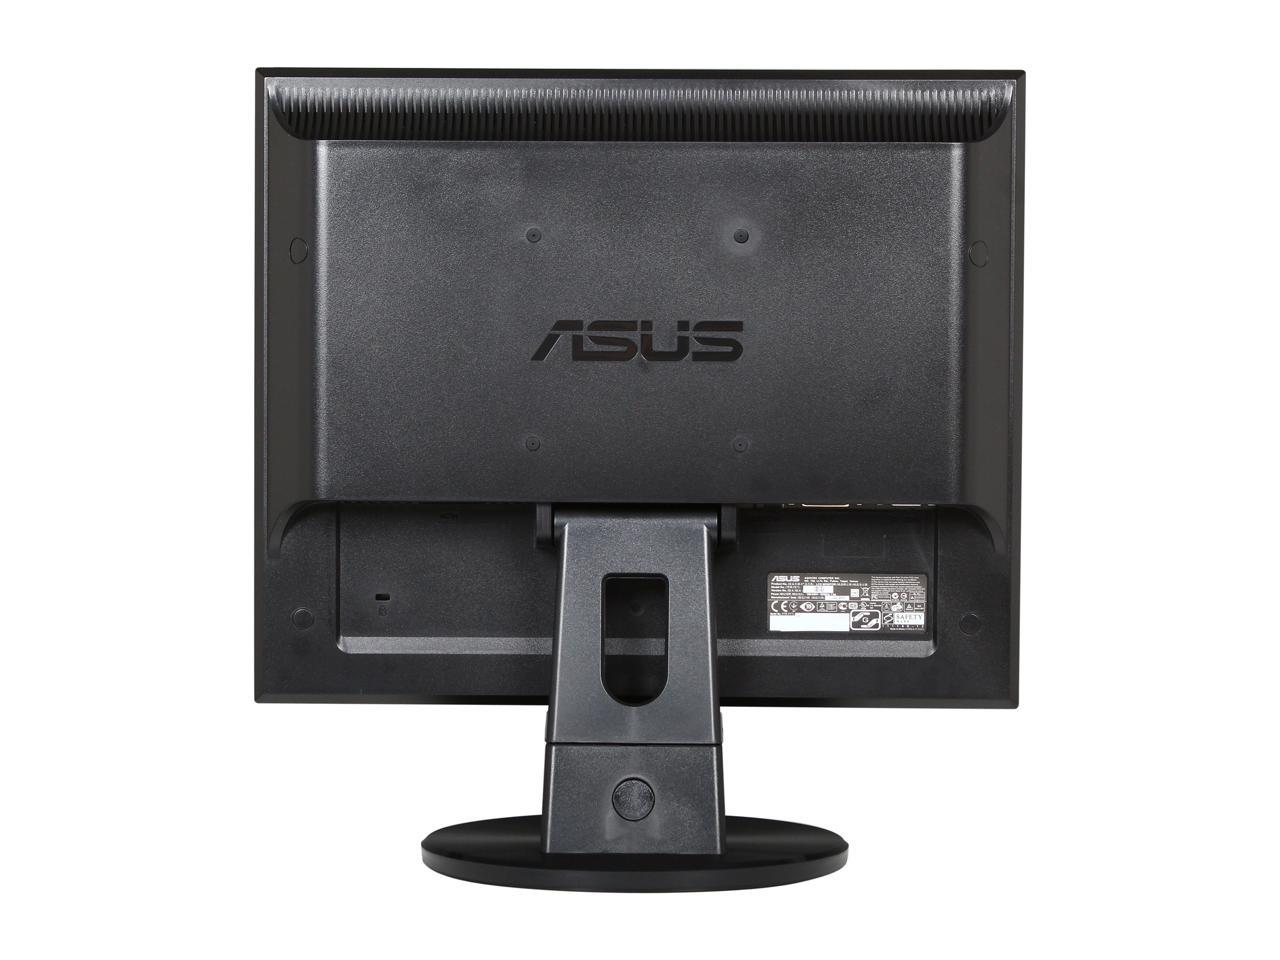 ASUS VB178T 17" 1280 x 1024 D-Sub, DVI Built-in Speakers LCD Monitor